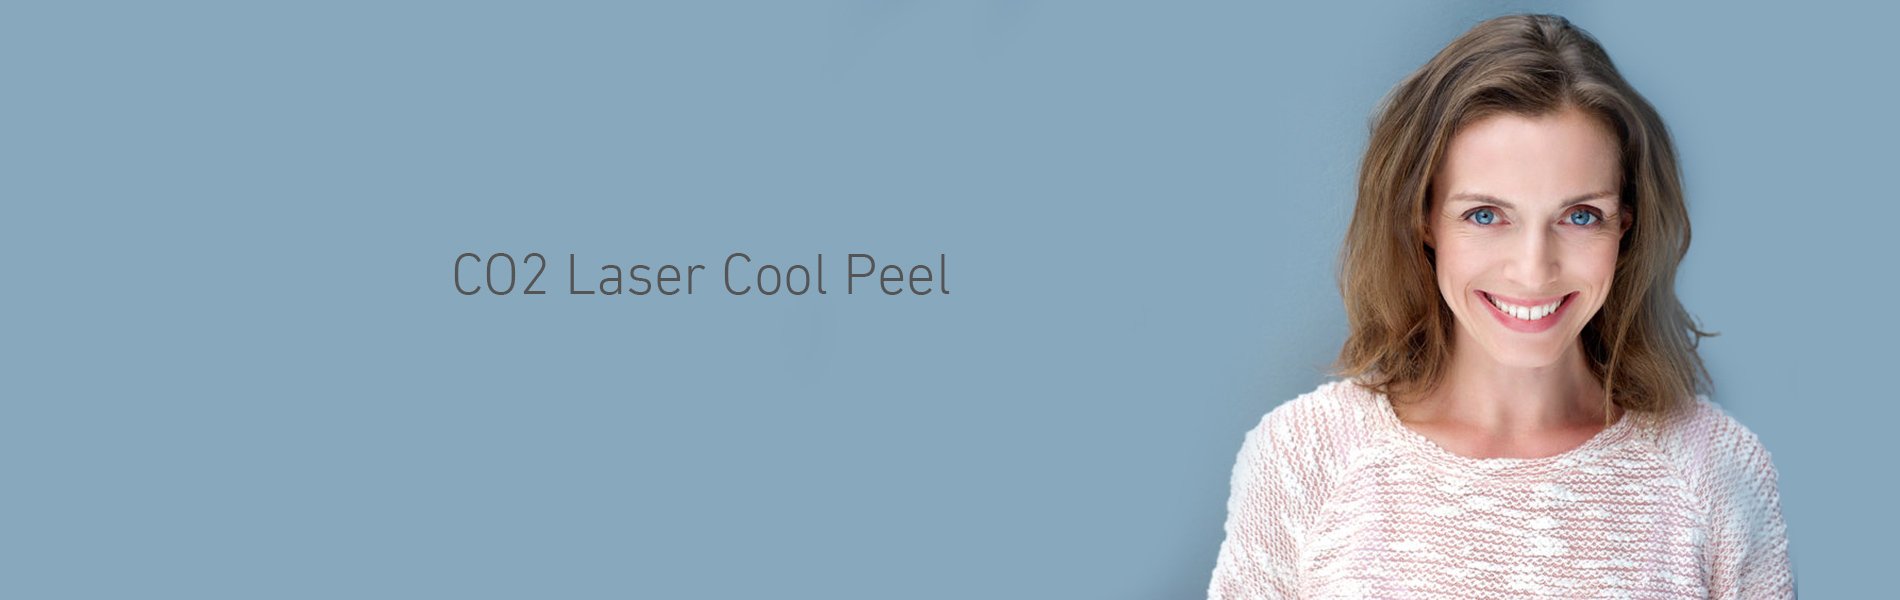 CO2 Laser Cool Peel Anti-Wrinkle Treatments CJA Aesthetics Clinics Southampton